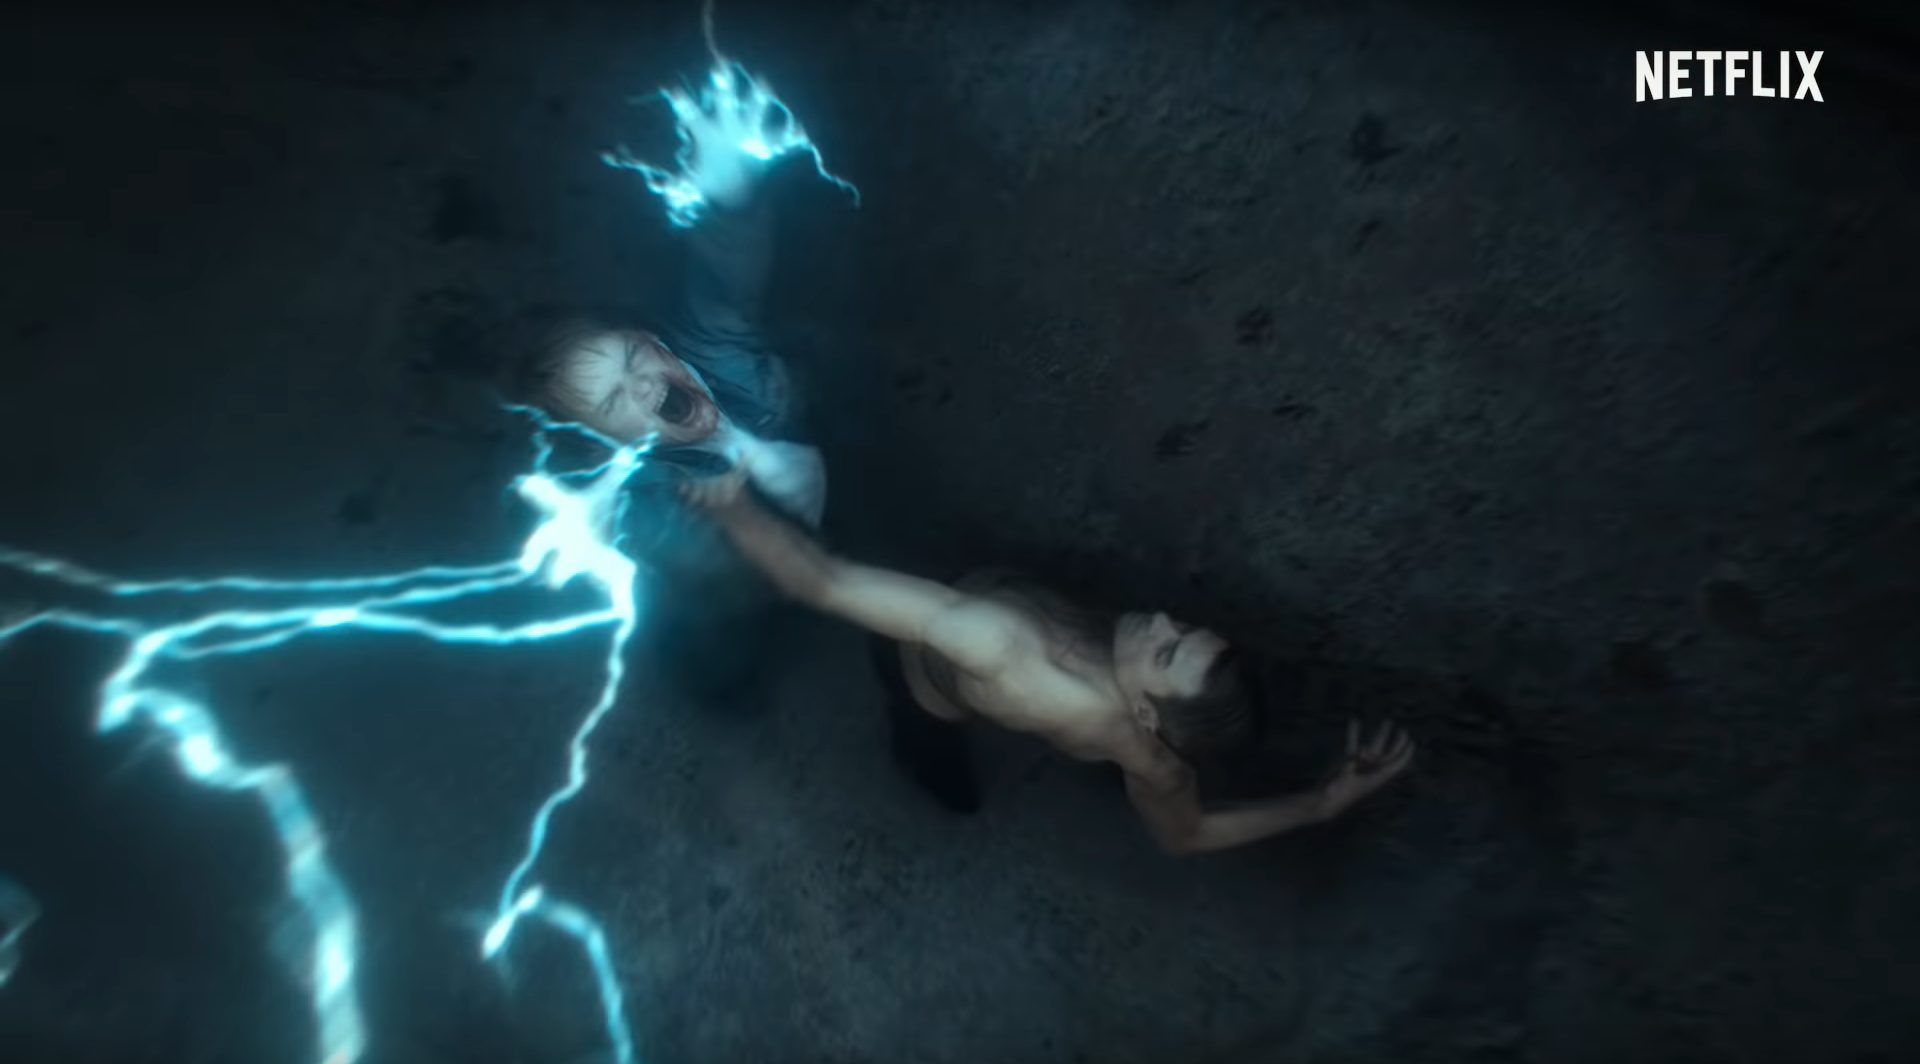 Thor and Loki Given a Modern Twist in Netflix's “Ragnarok”